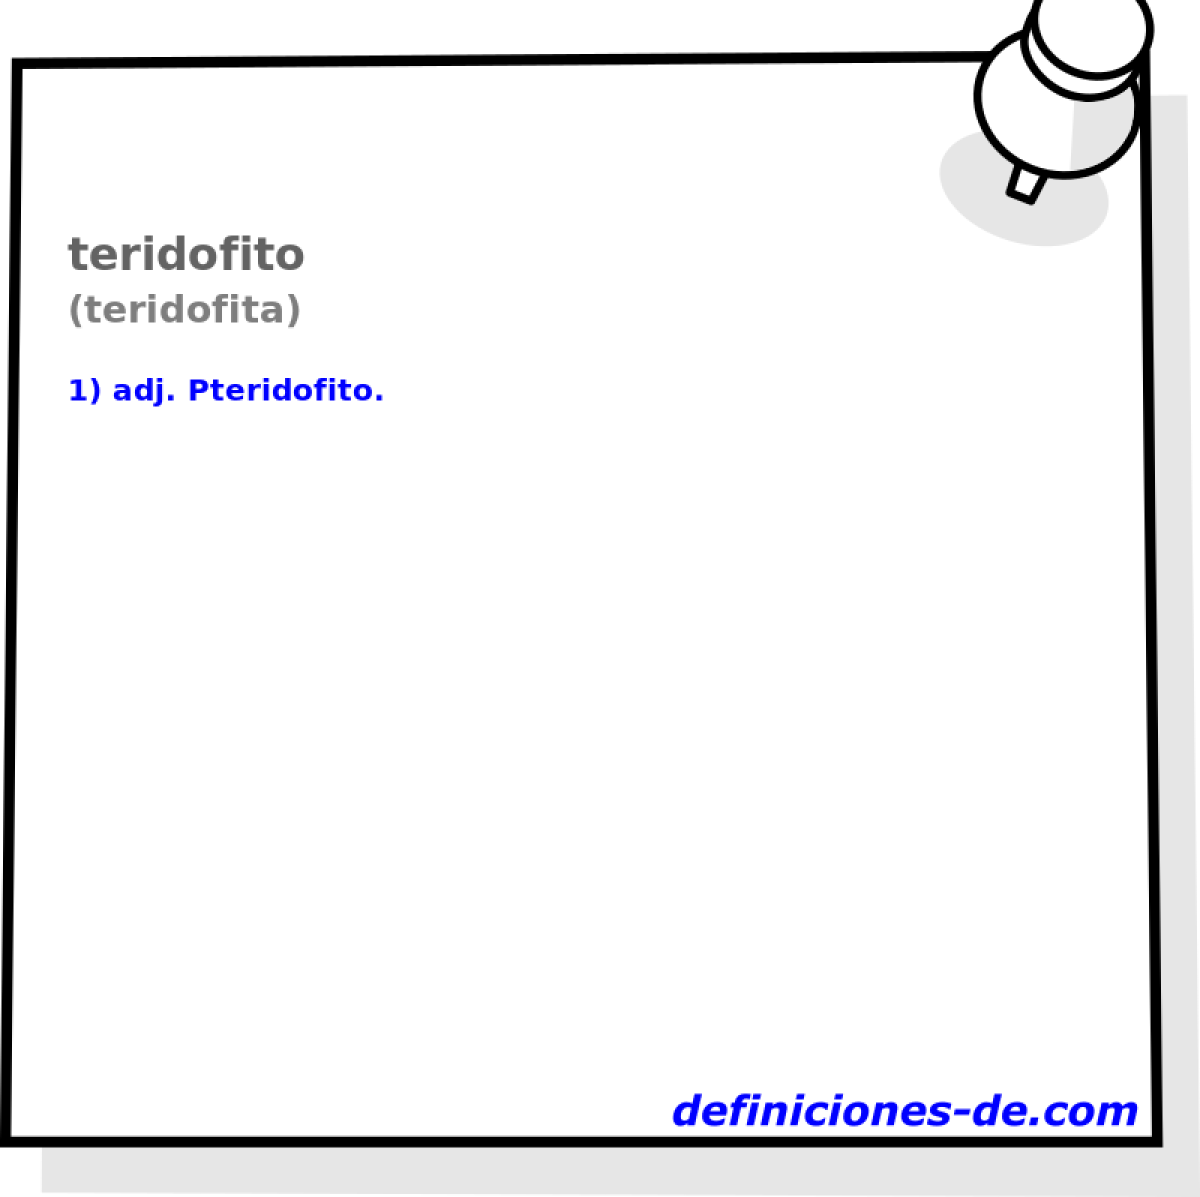 teridofito (teridofita)